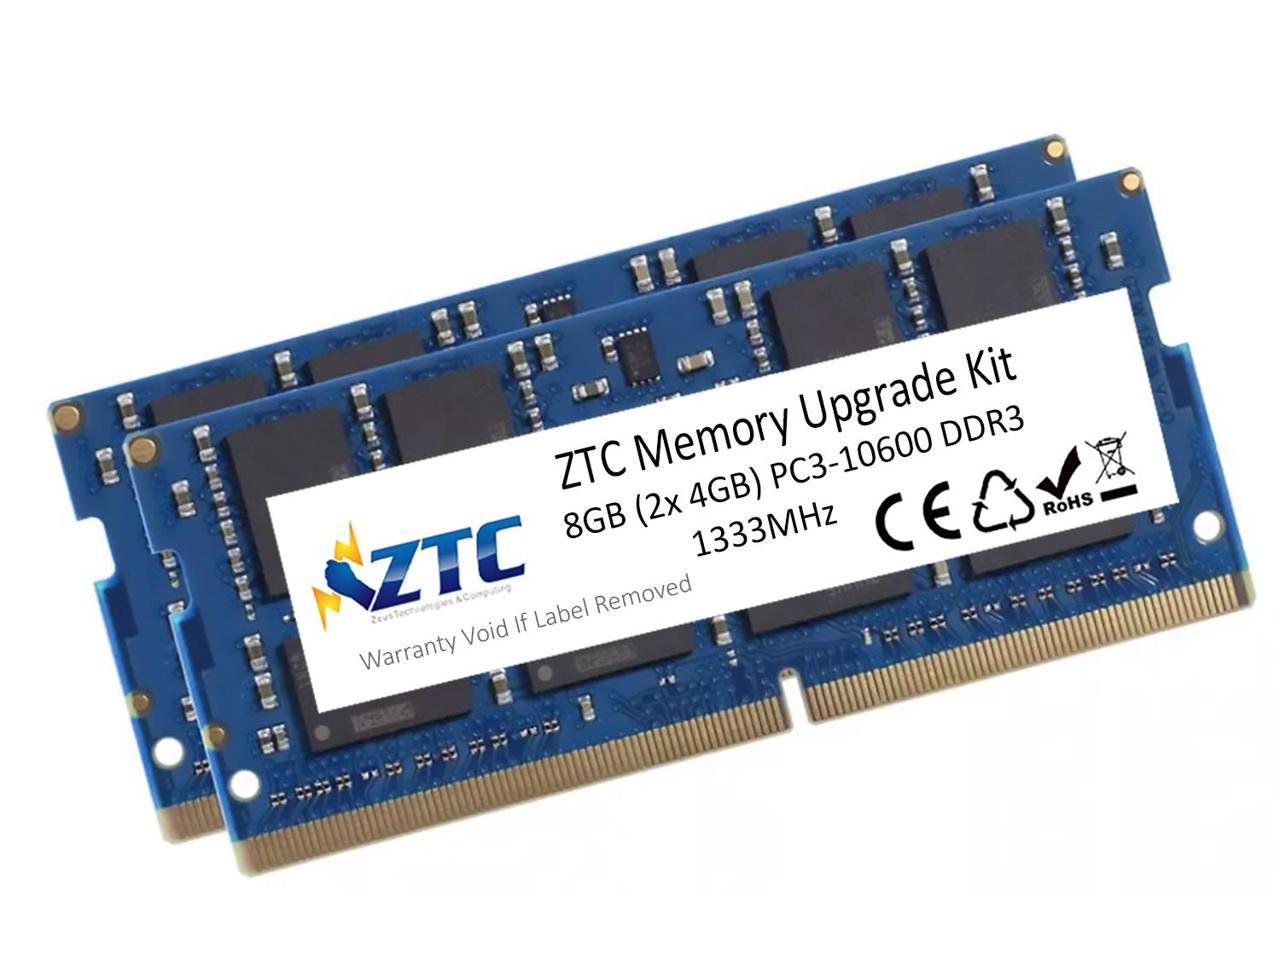 ZTC 8GB (2X 4GB) DDR3 PC3-10600 1333MHz SO-DIMM 204Pin CL9 Memory Upgrade Kit for 2011 MacBook Pro Models, Mid 2010/2011 21.5" & 27" iMac Models, Mid 2011 Mac Mini Models